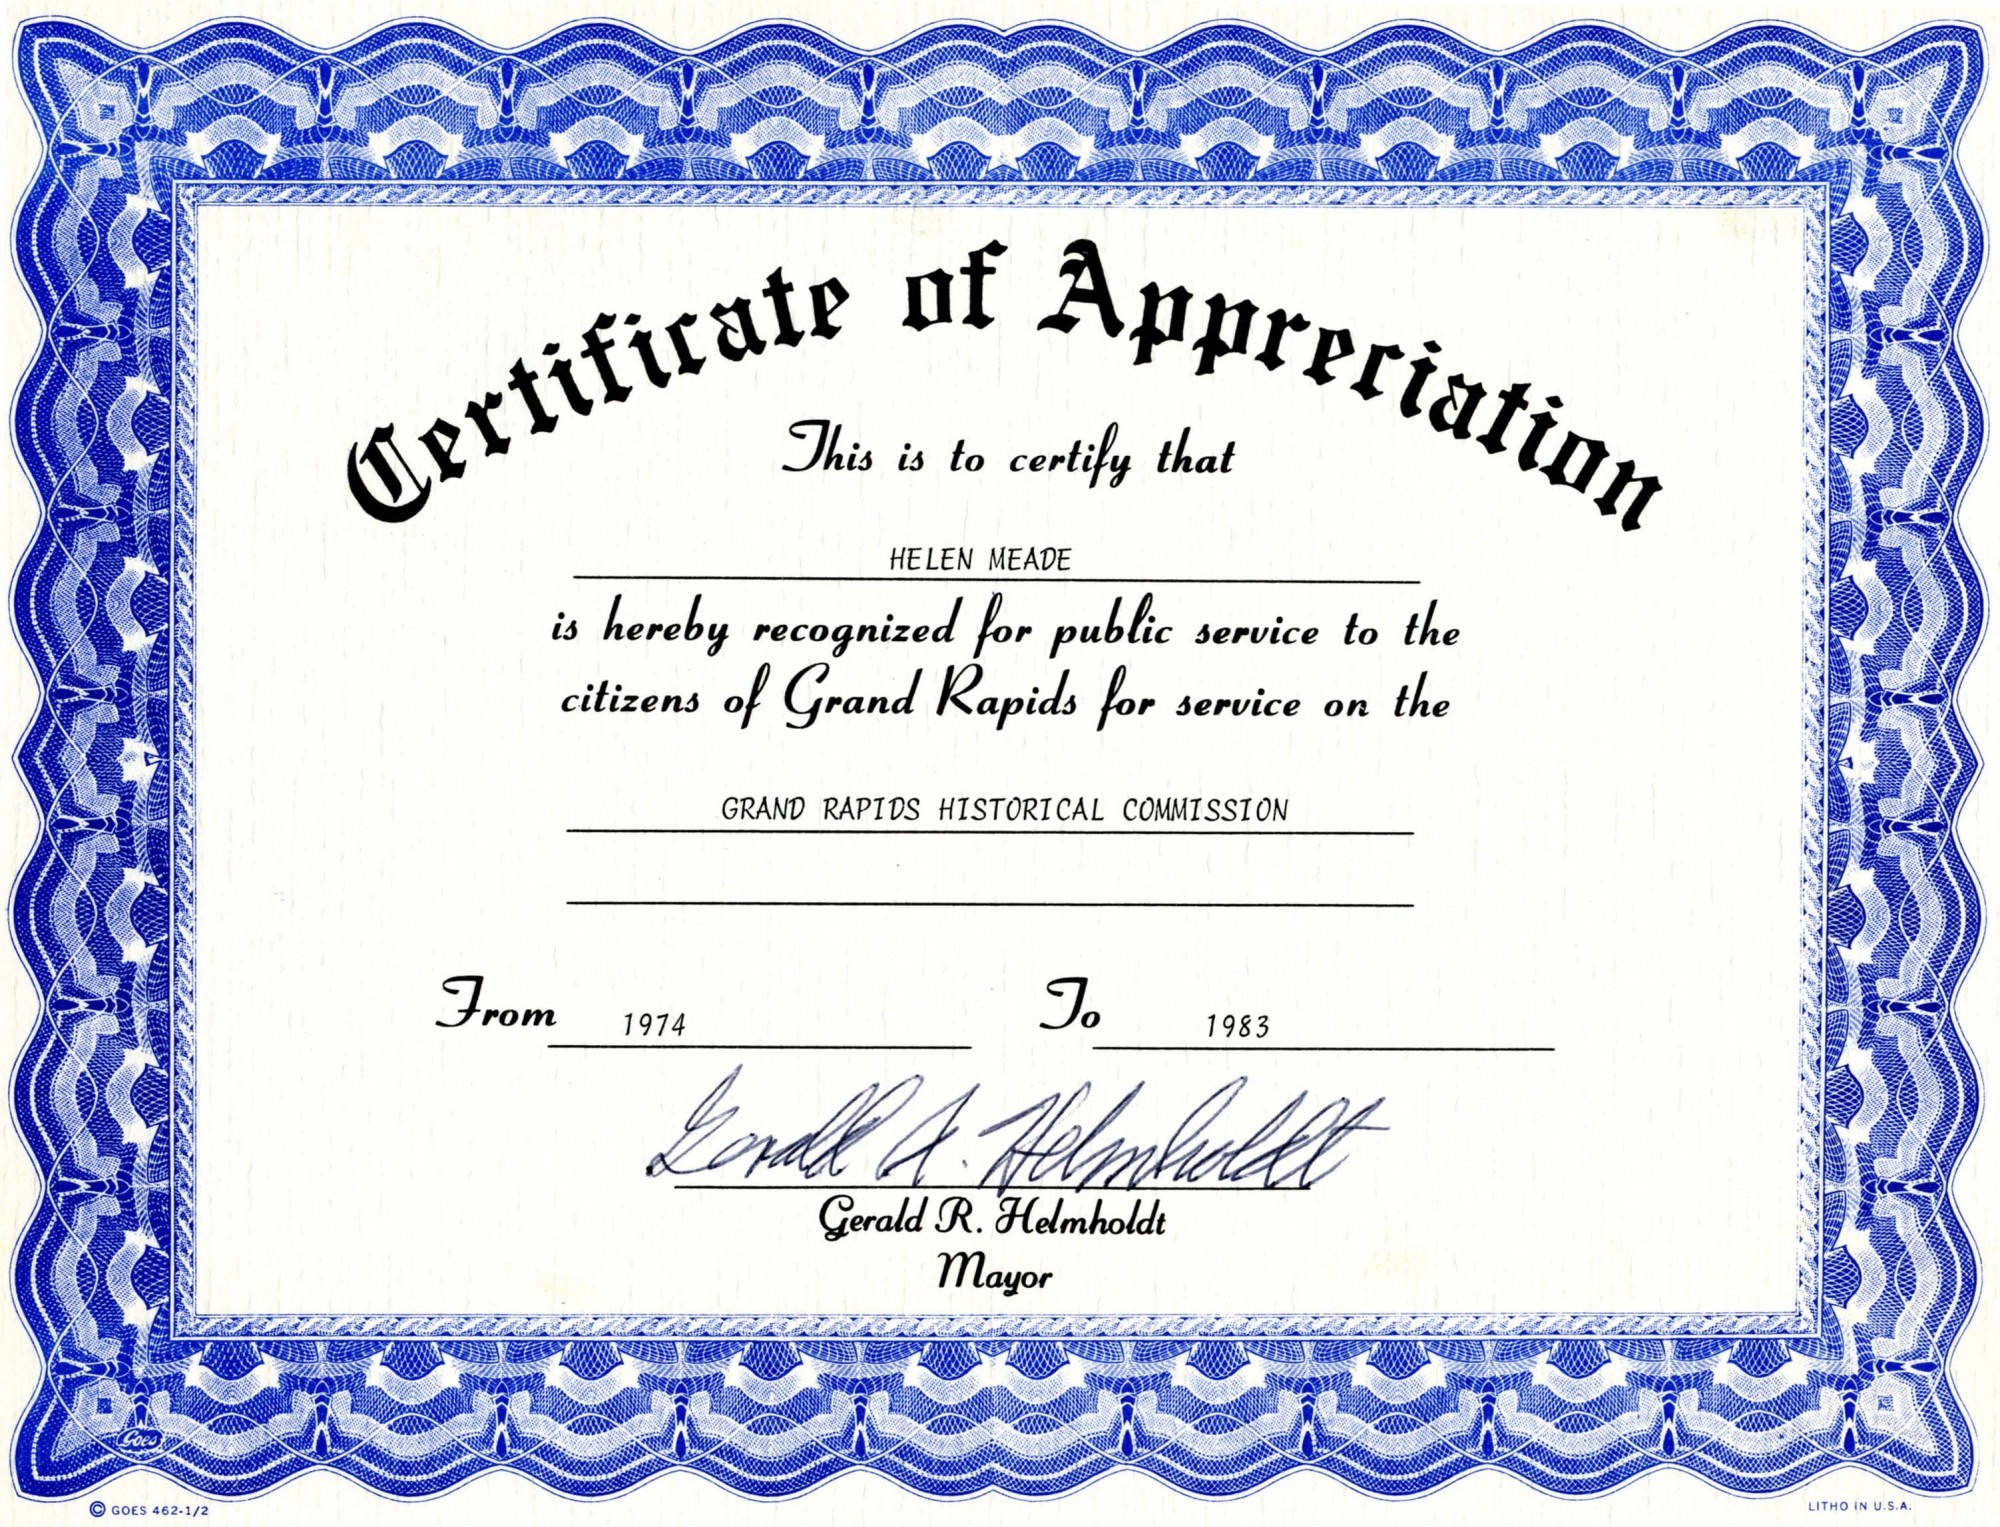 appreciation-certificate-template-free-download